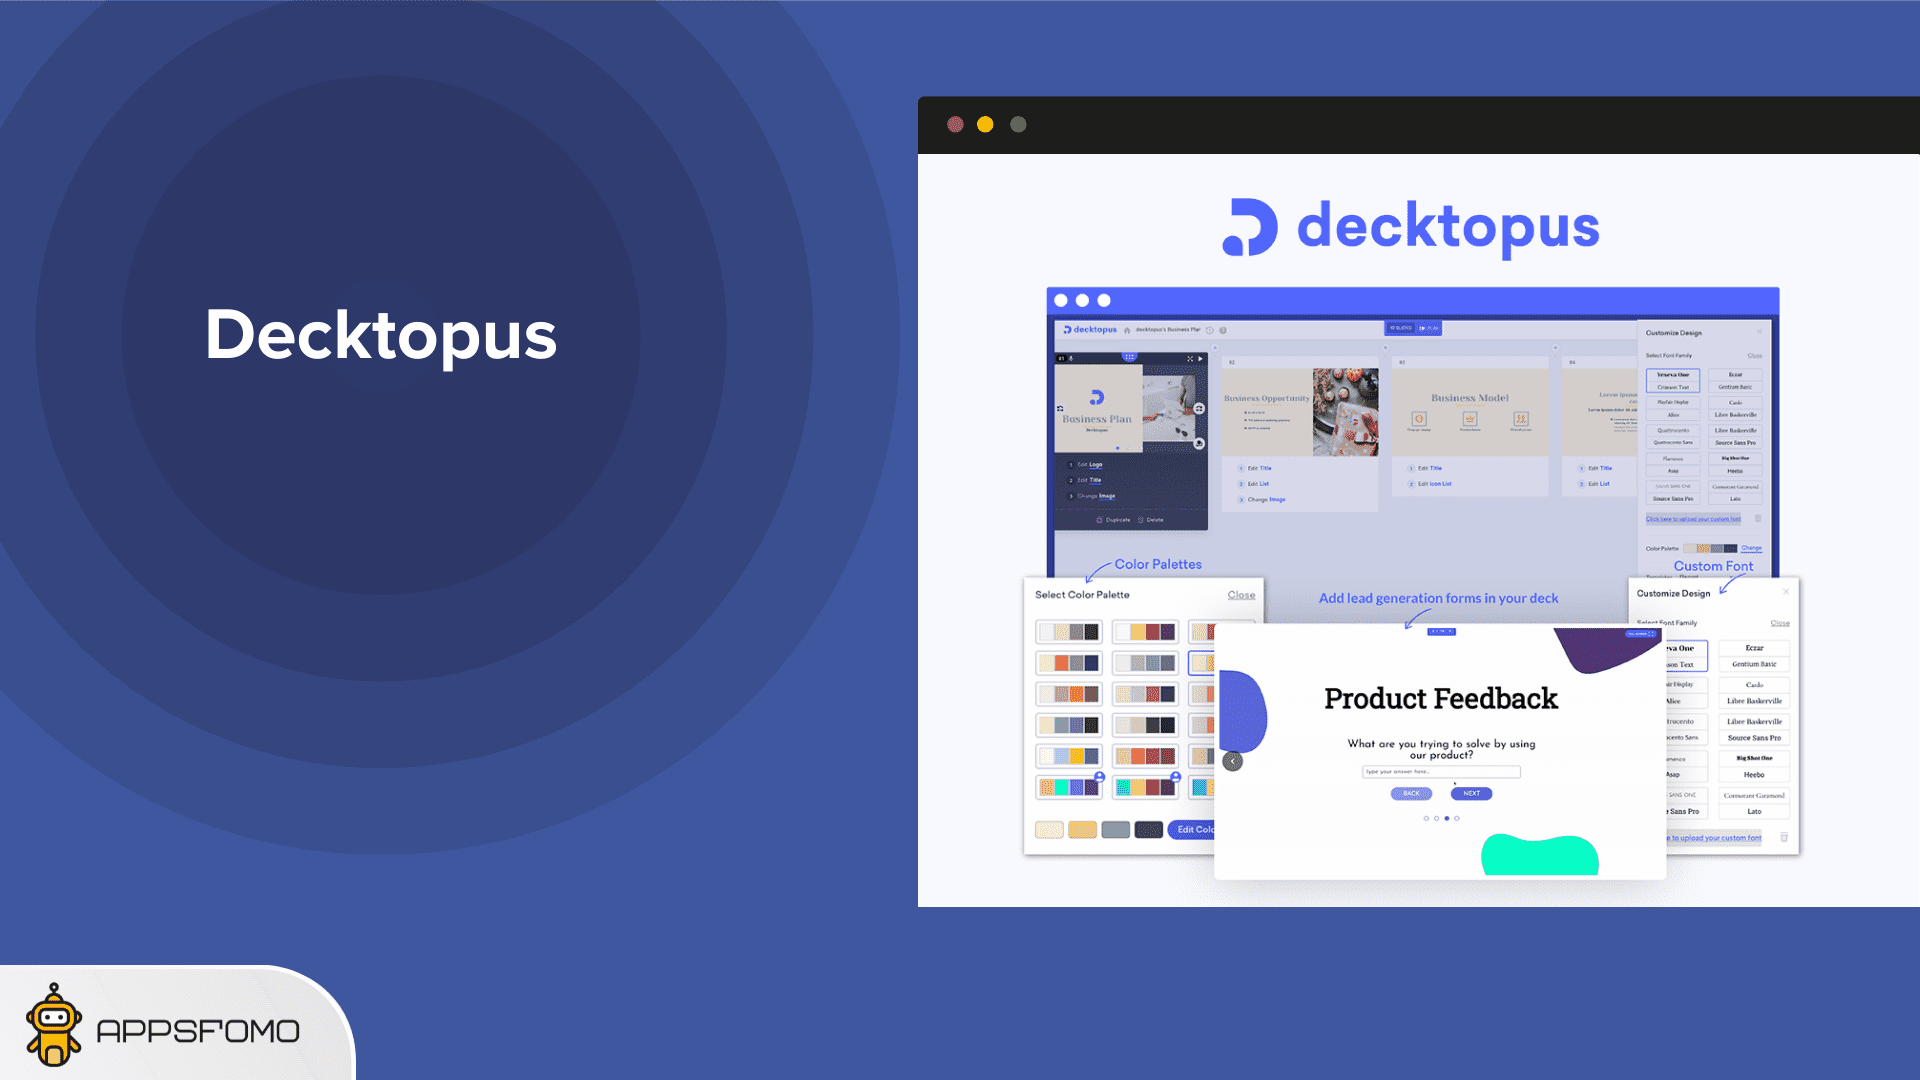 Decktopus